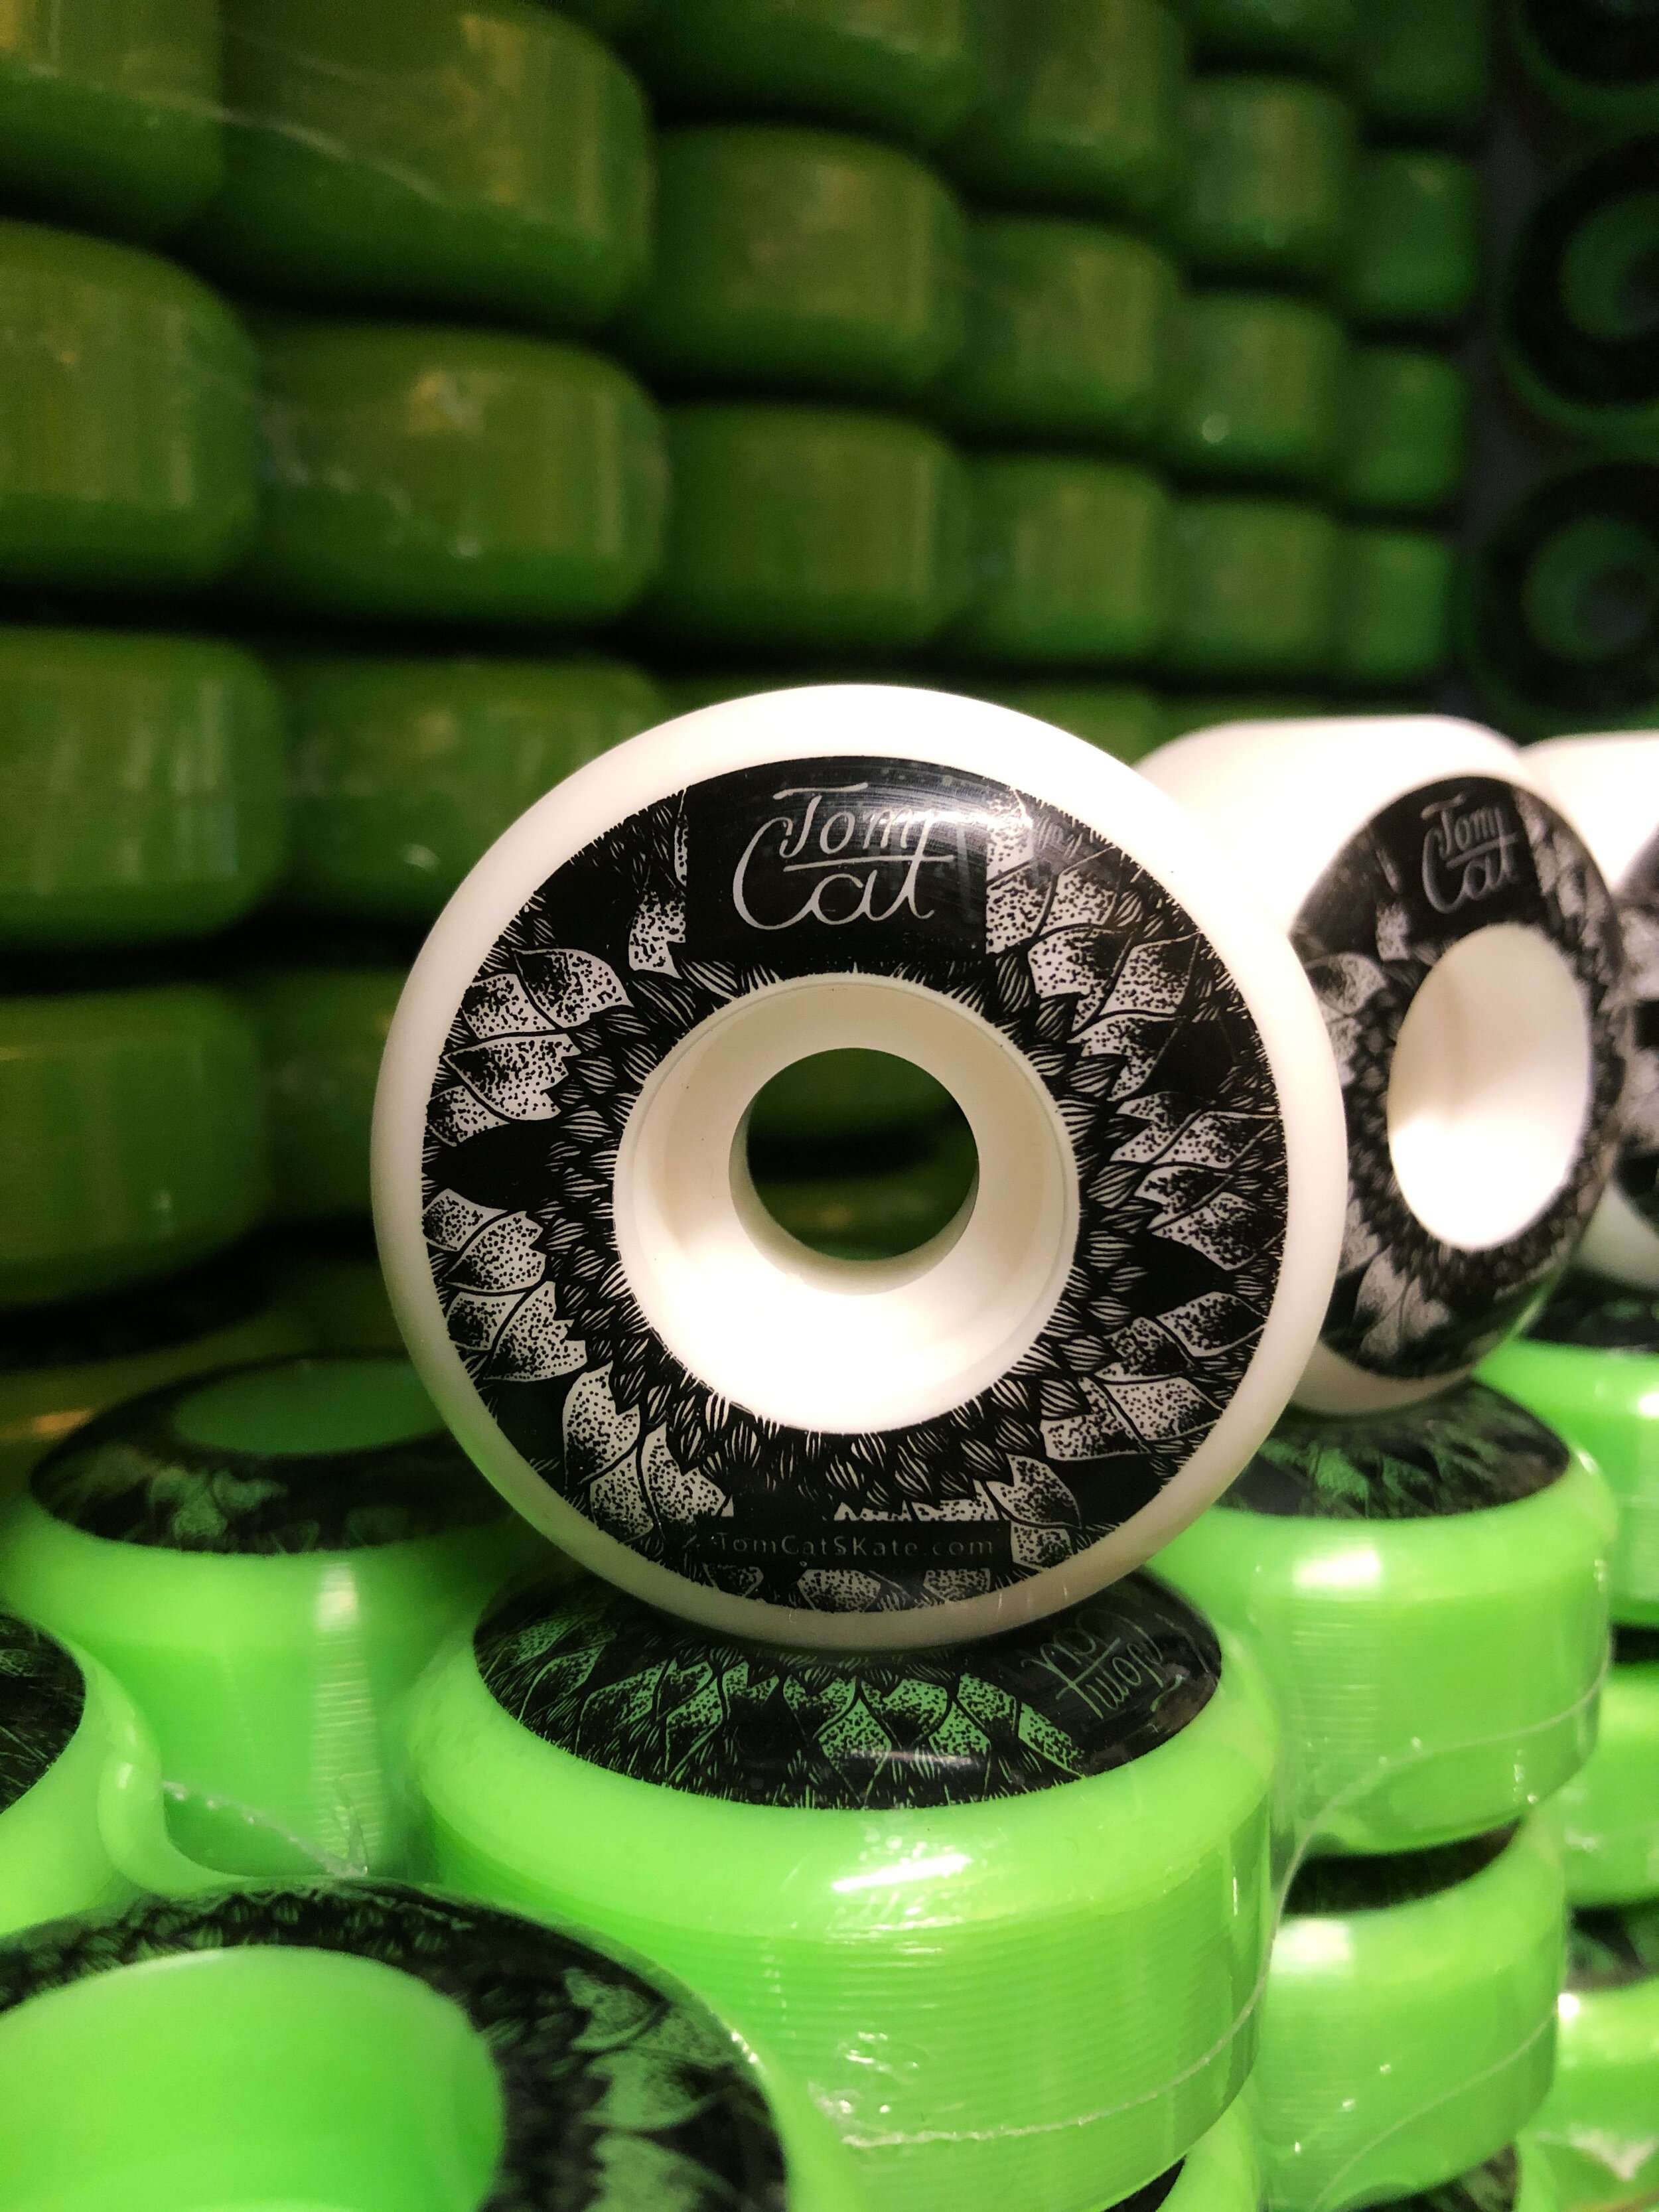 TomCat branded skateboard wheels photo